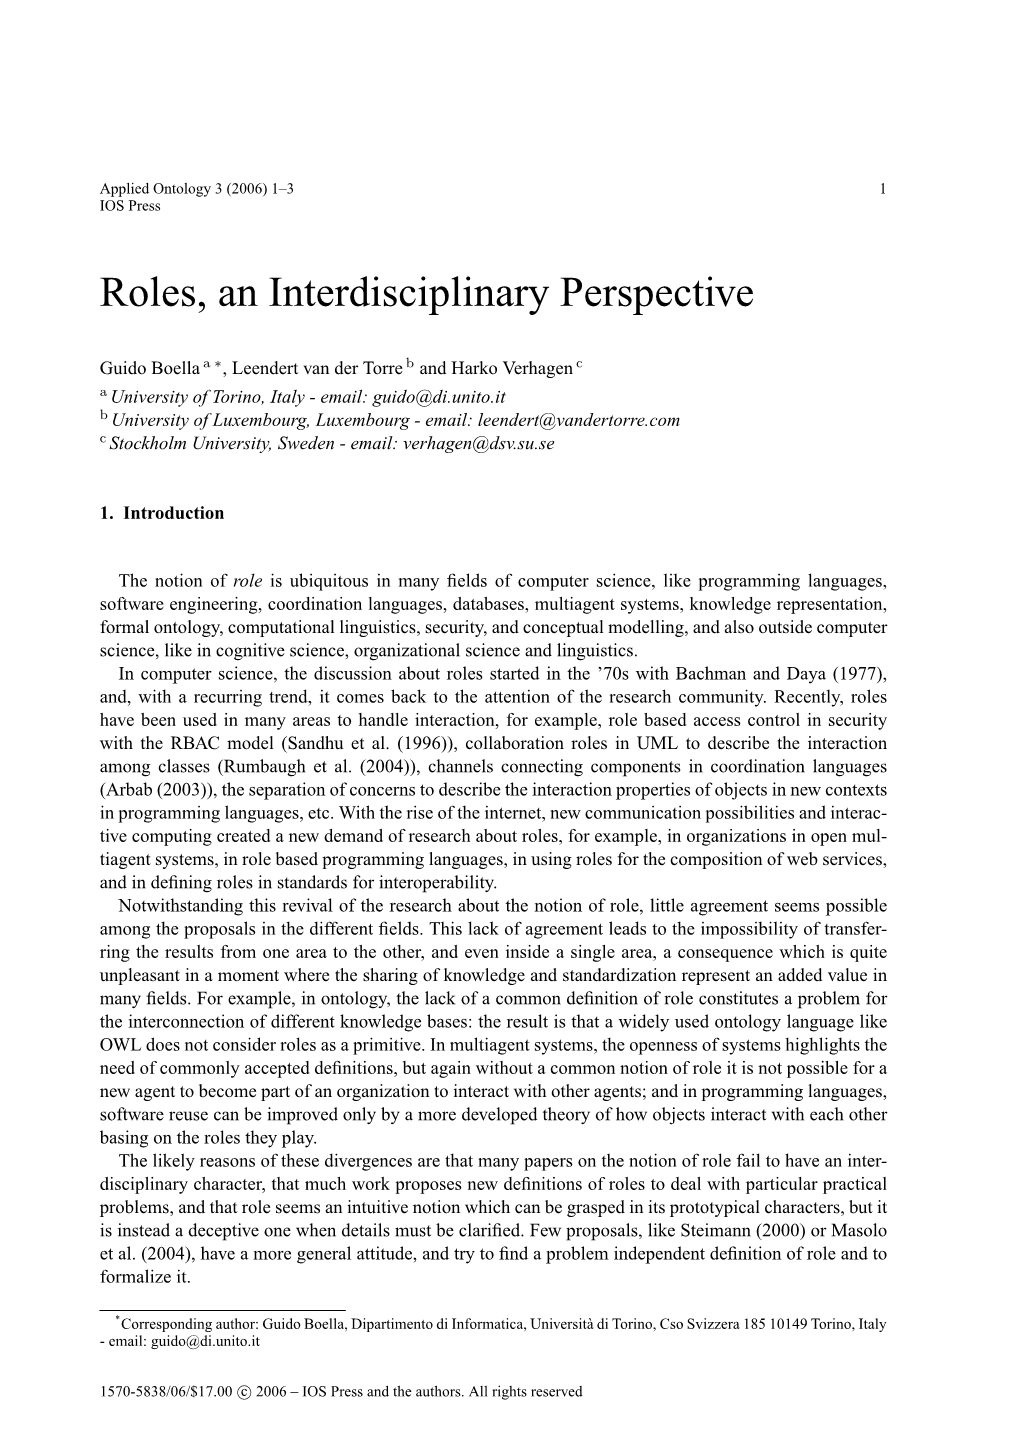 Roles, an Interdisciplinary Perspective